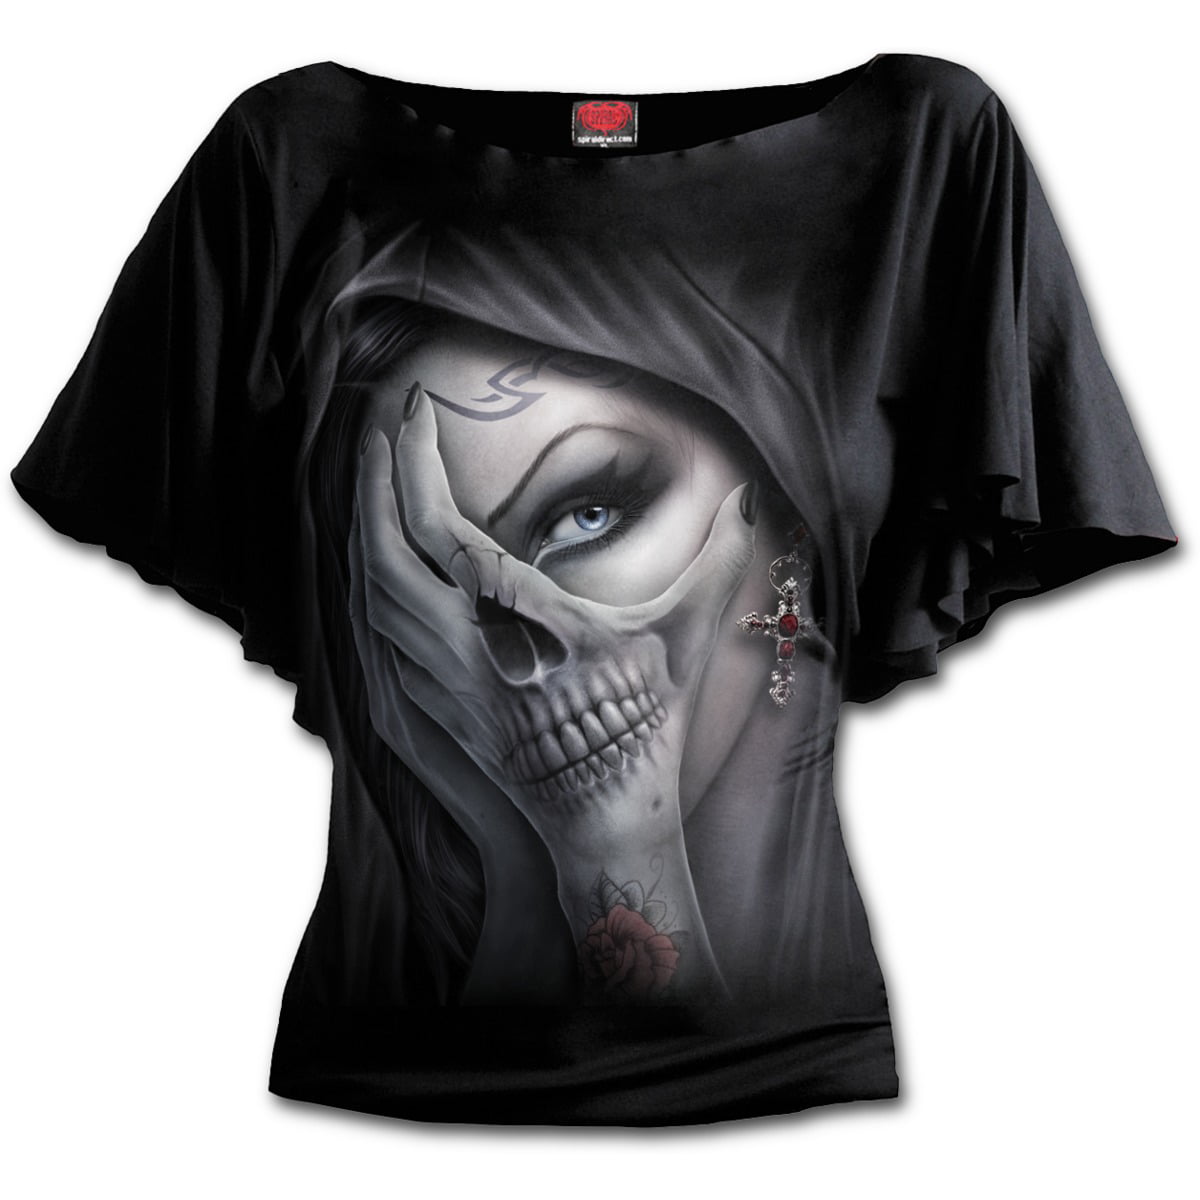 spiral Direct NEW DESIGNS Skull/Dragon/Reaper/Rock/Metal/Xmas/Gift/T shirt/Top